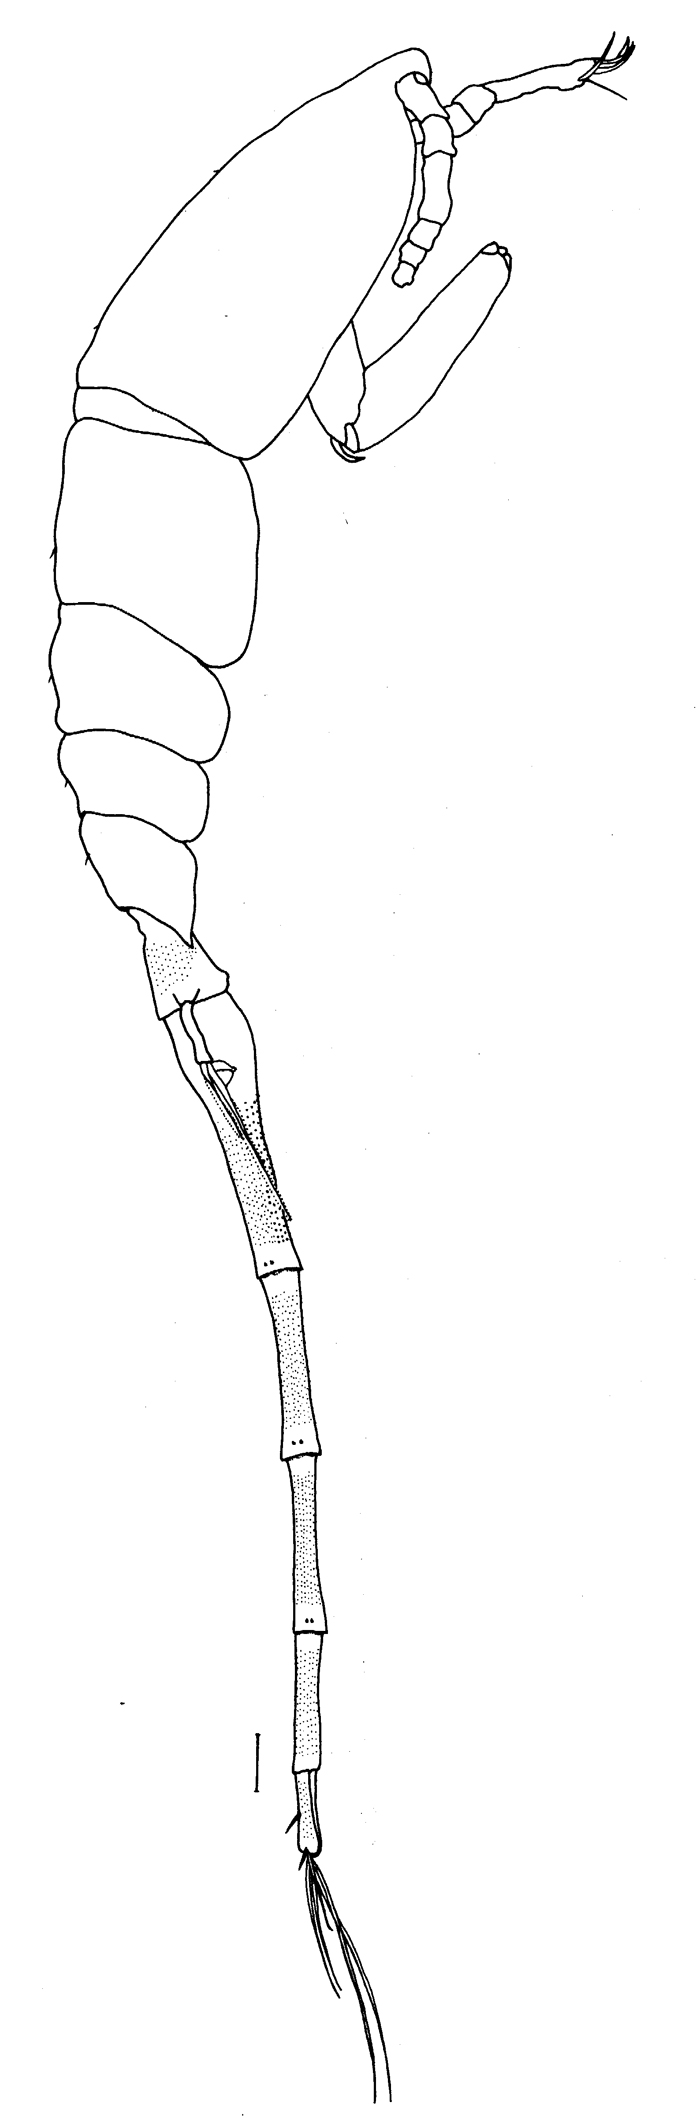 Species Lubbockia wilsonae - Plate 4 of morphological figures